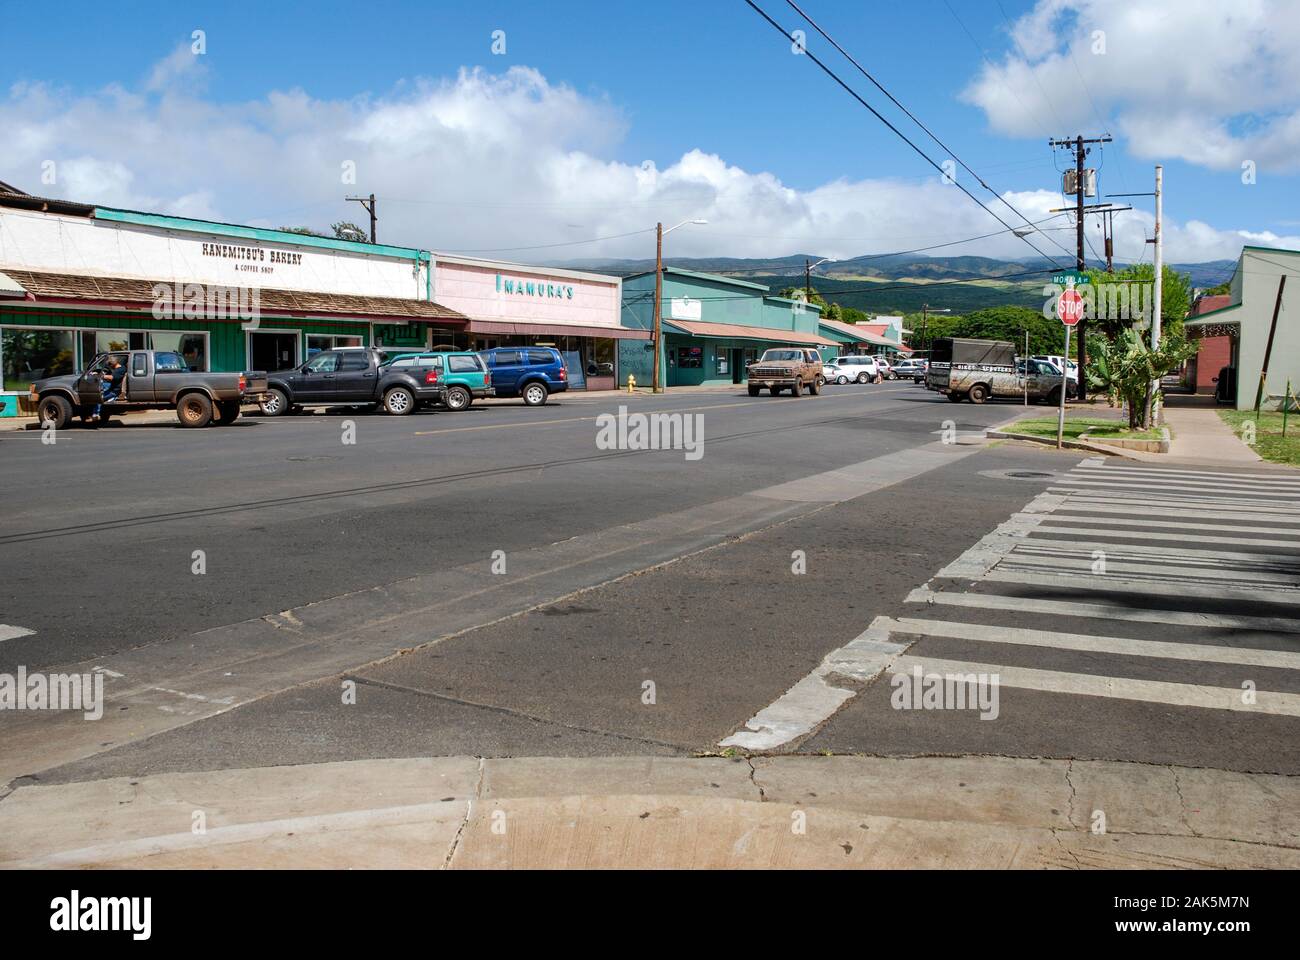 Kaunakakai the main city on Molokai Hawaii showing Kanemitsu's Bakery storefront.  One of Molokai's longest standing eateries Stock Photo